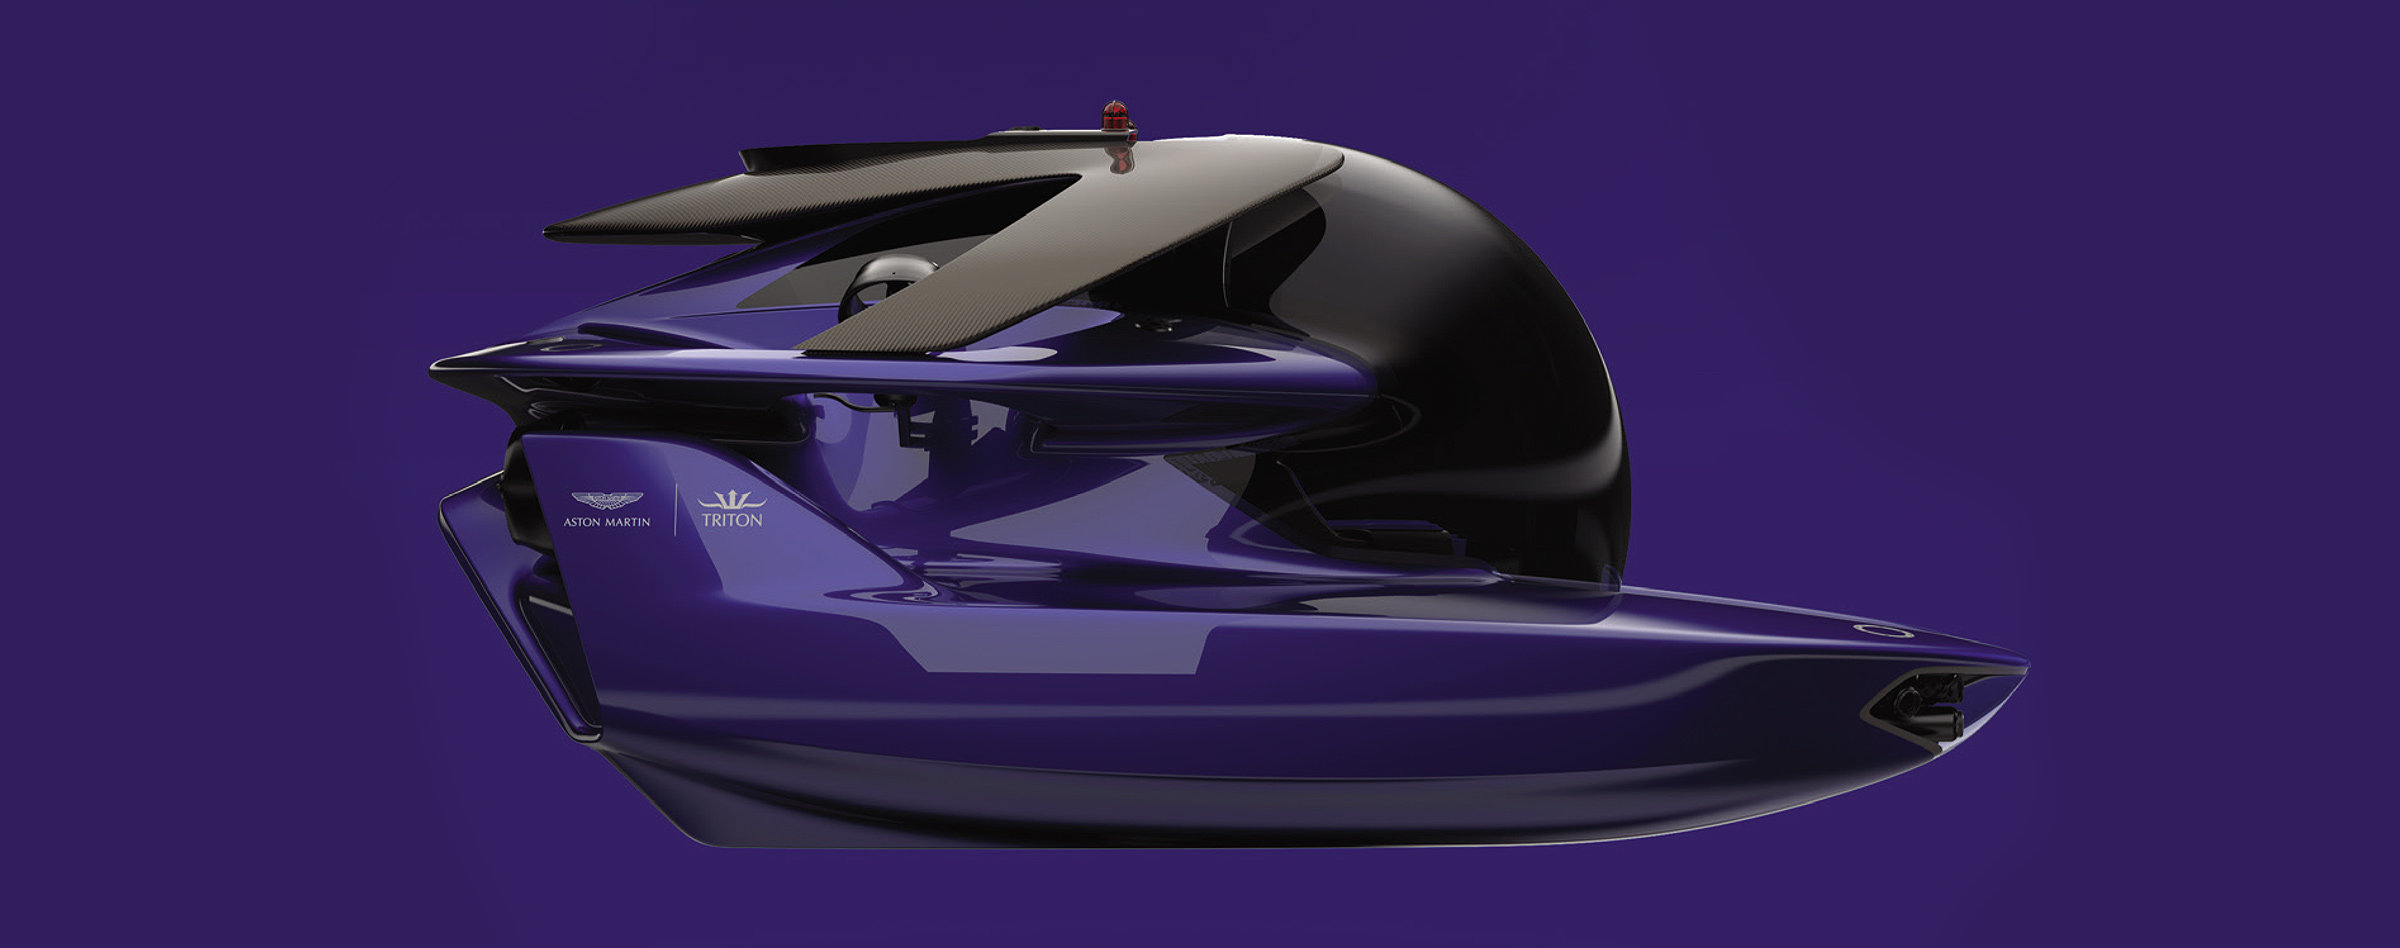 Triton & Aston Martin’s sleek and sculpted submersible.